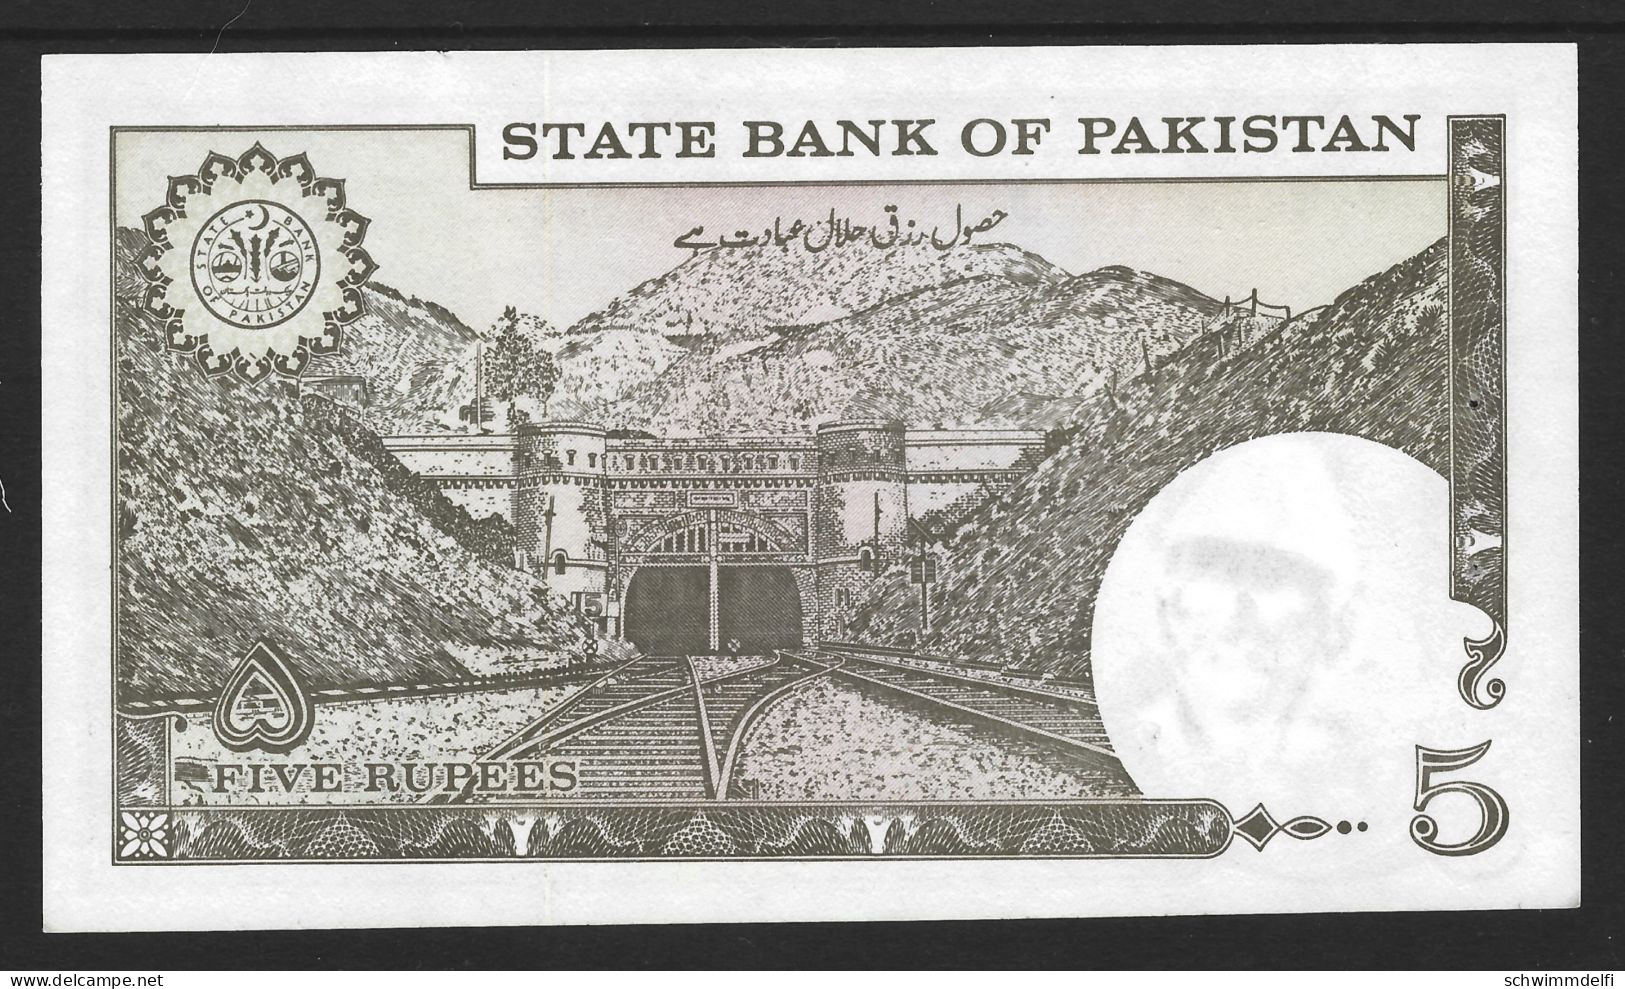 PAKISTAN - 5 RUPEES 1976 - 1984 - PICK: 38 - SIN CIRCULAR - UNZIRKULIERT - UNCIRCULATED - Pakistán